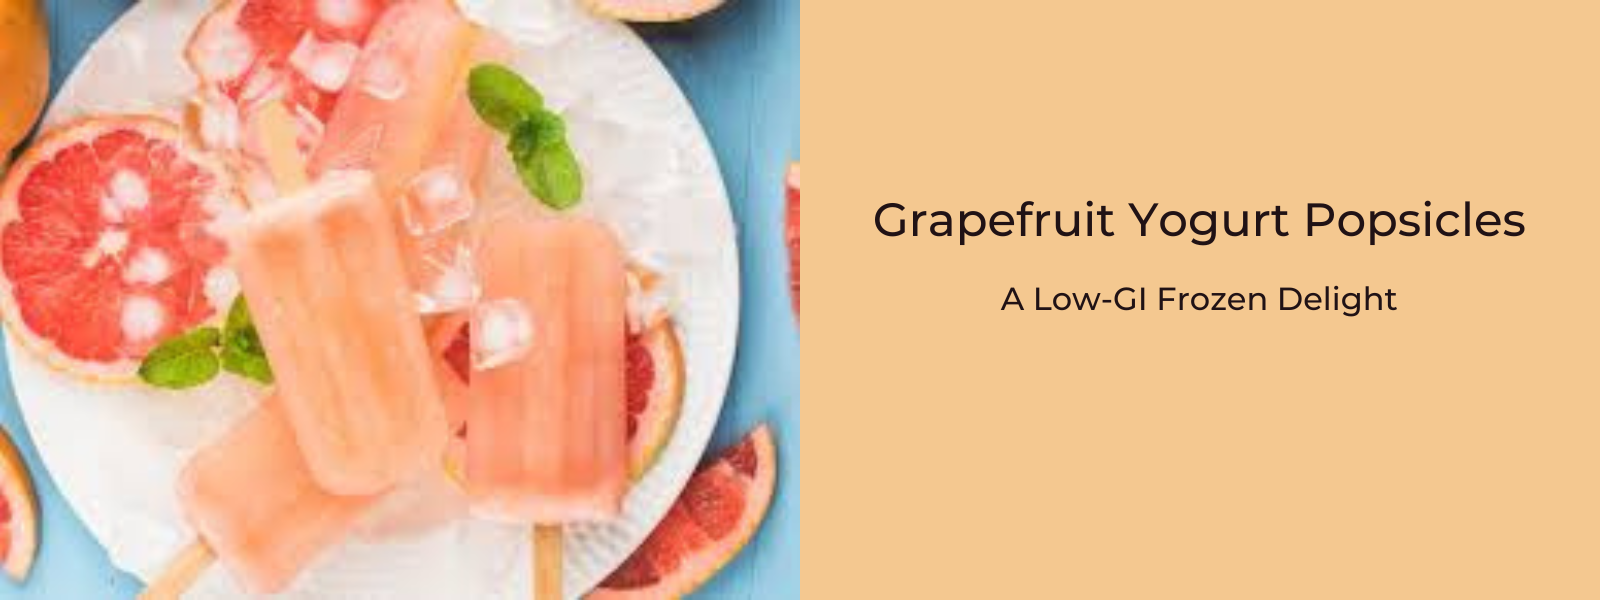 Grapefruit Yogurt Popsicles: A Low-GI Frozen Delight